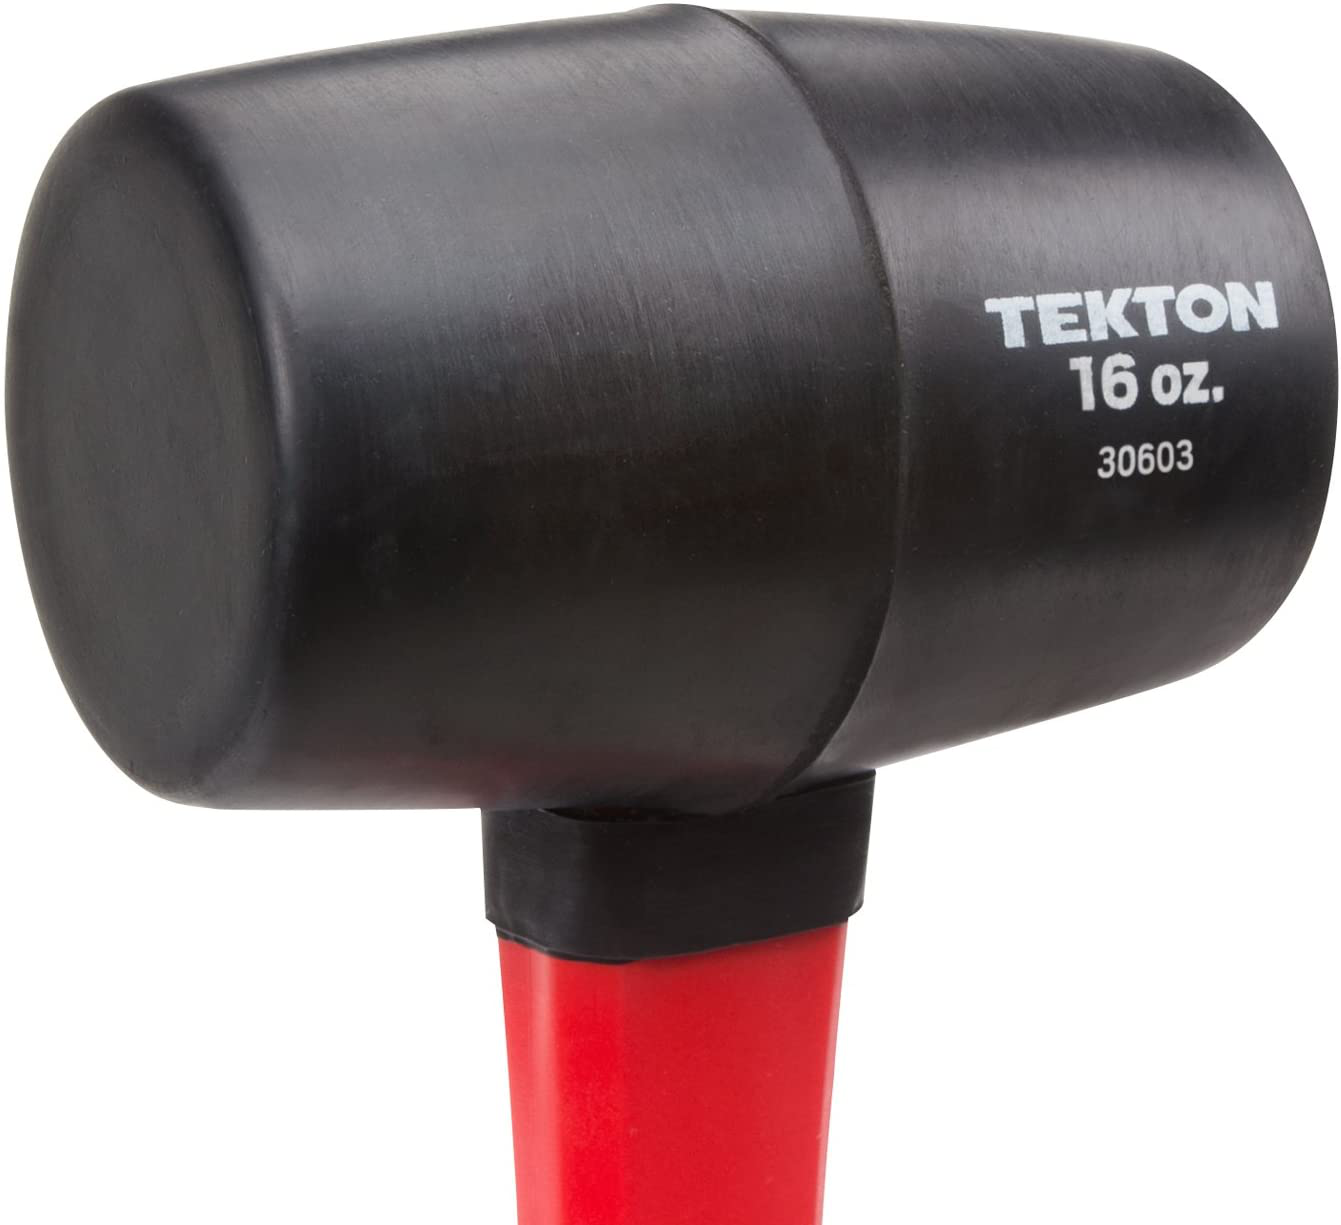 TEKTON 30603 Fiberglass Handle Rubber Mallet, 16-Ounce - Black & 30812 Double-Faced Soft Mallet, 35 mm